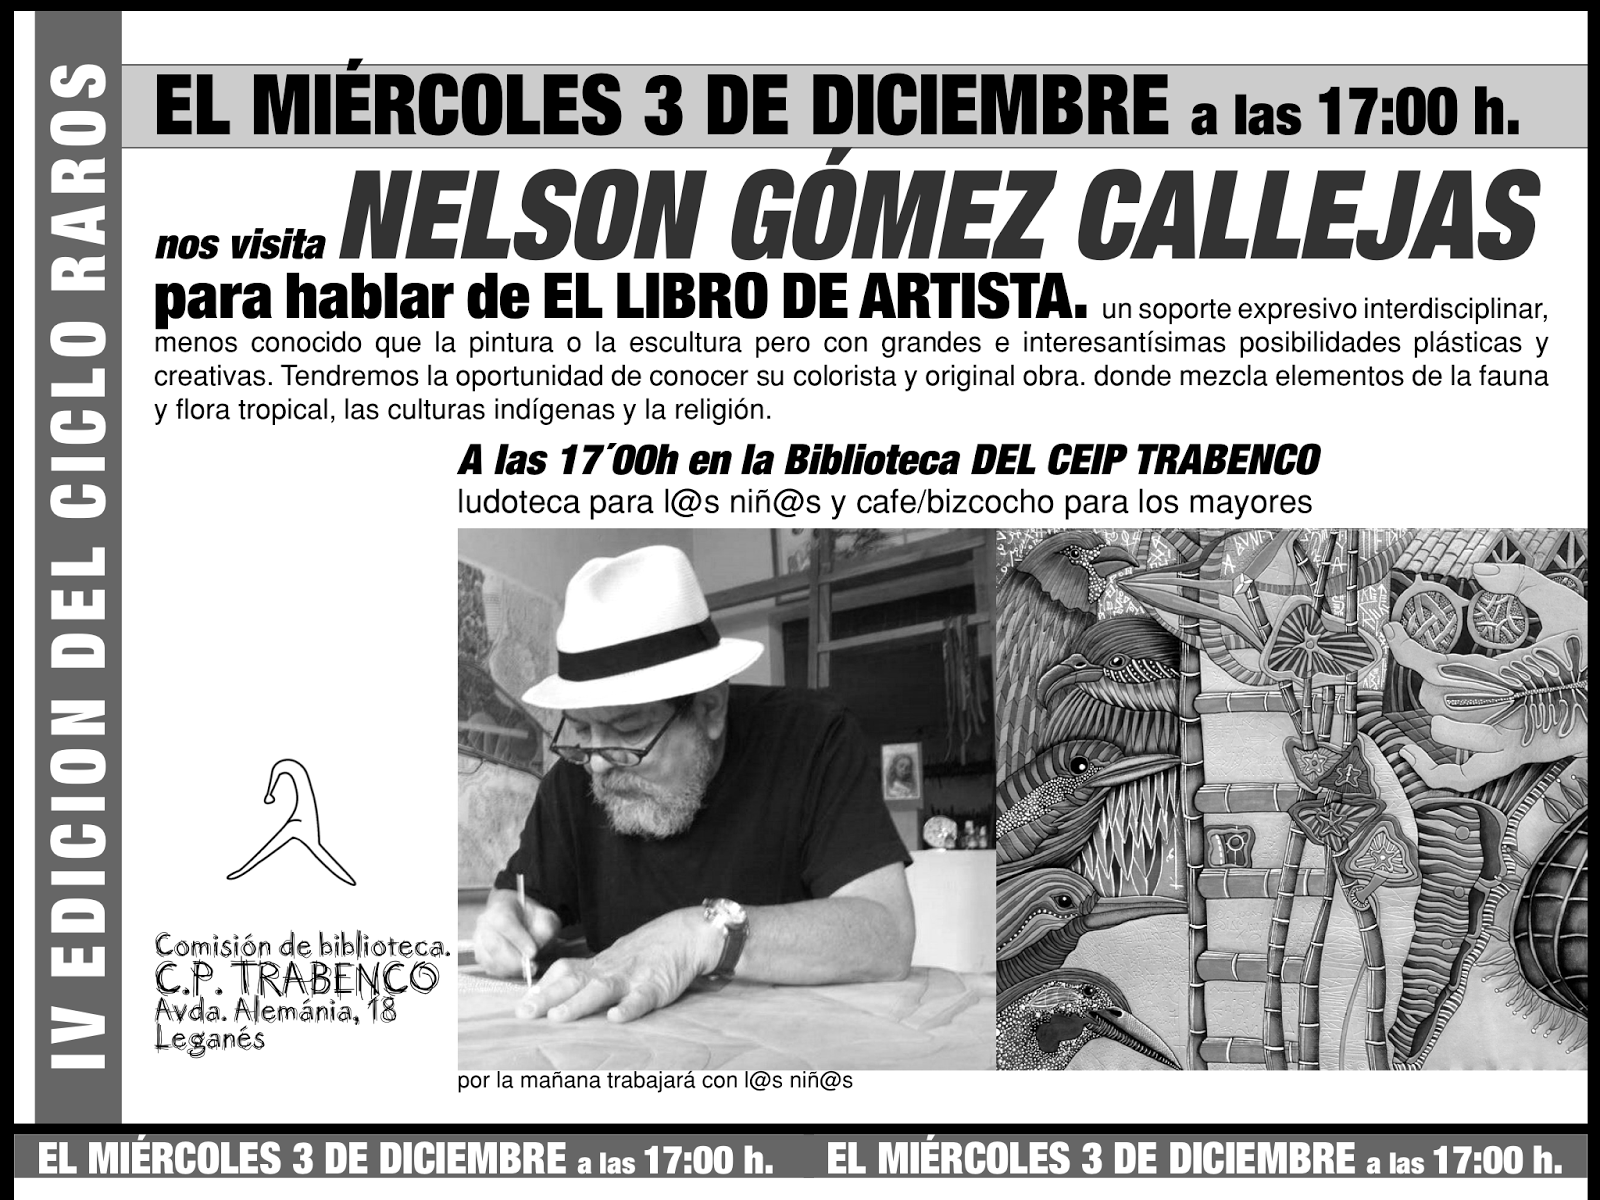 Nelson Gómez Callejas